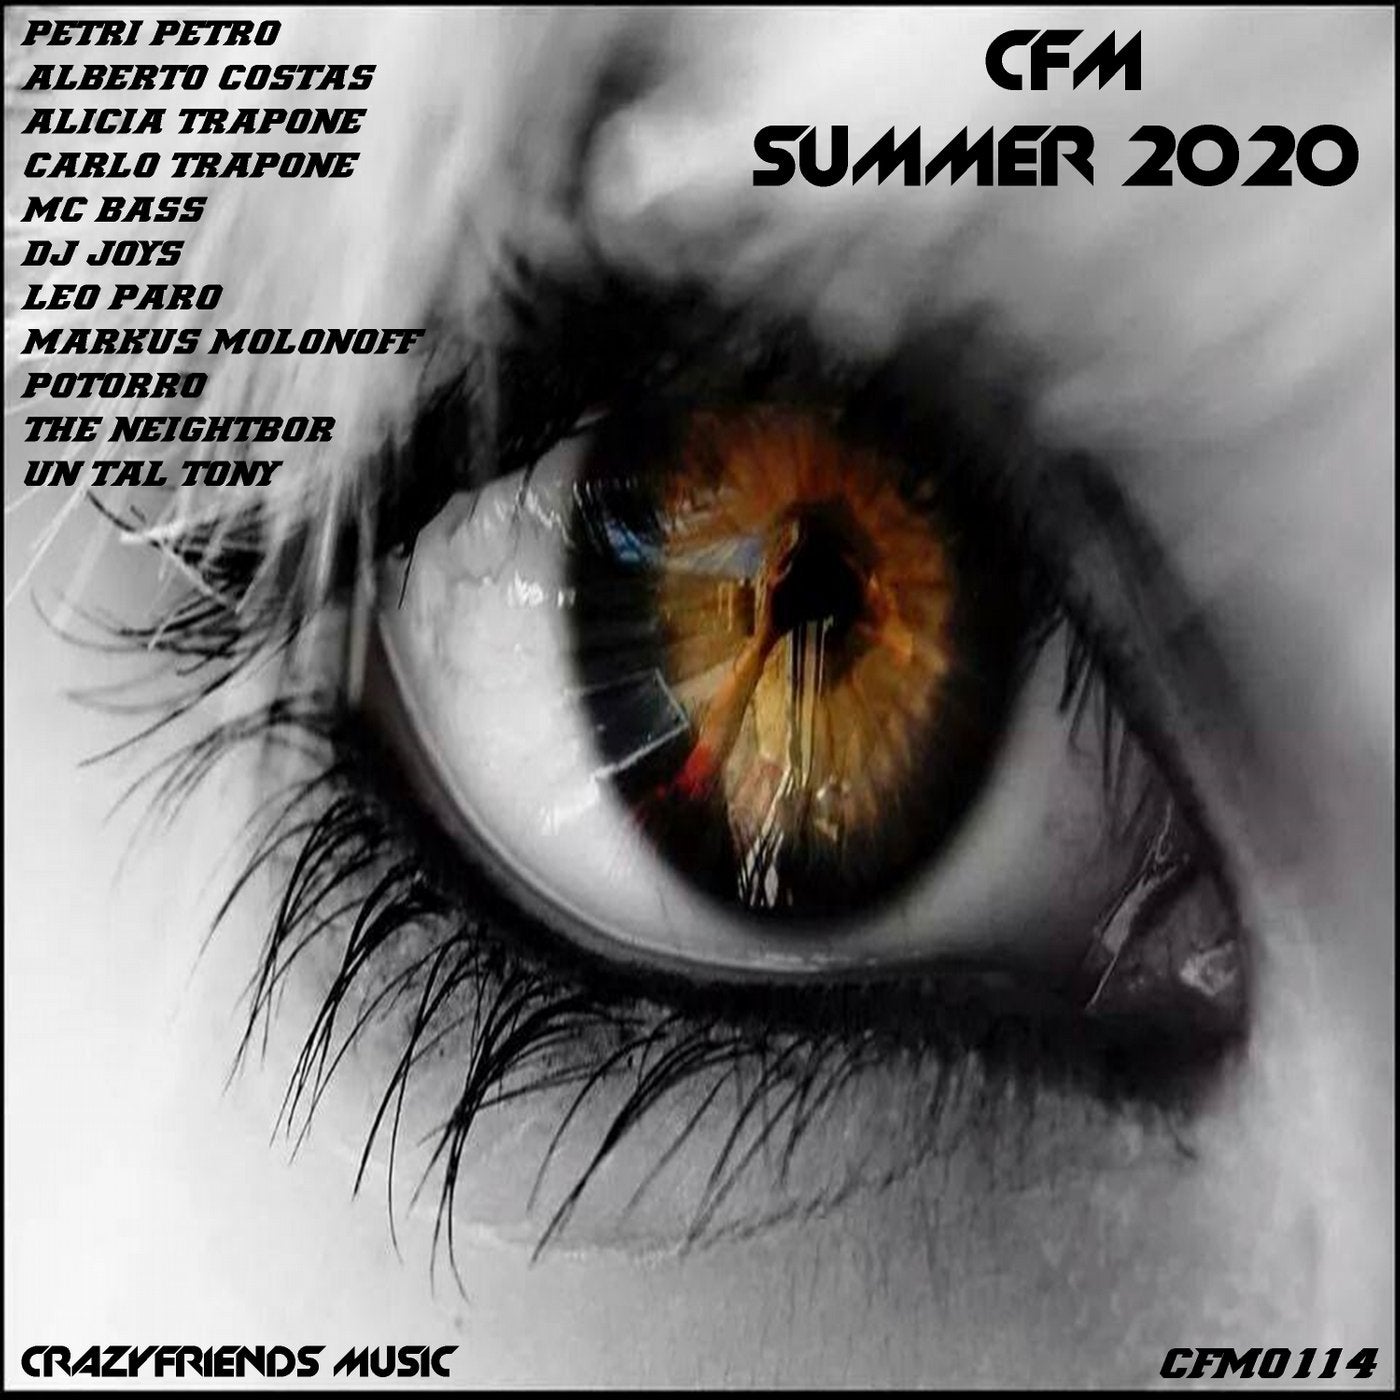 CFM Summer 2020